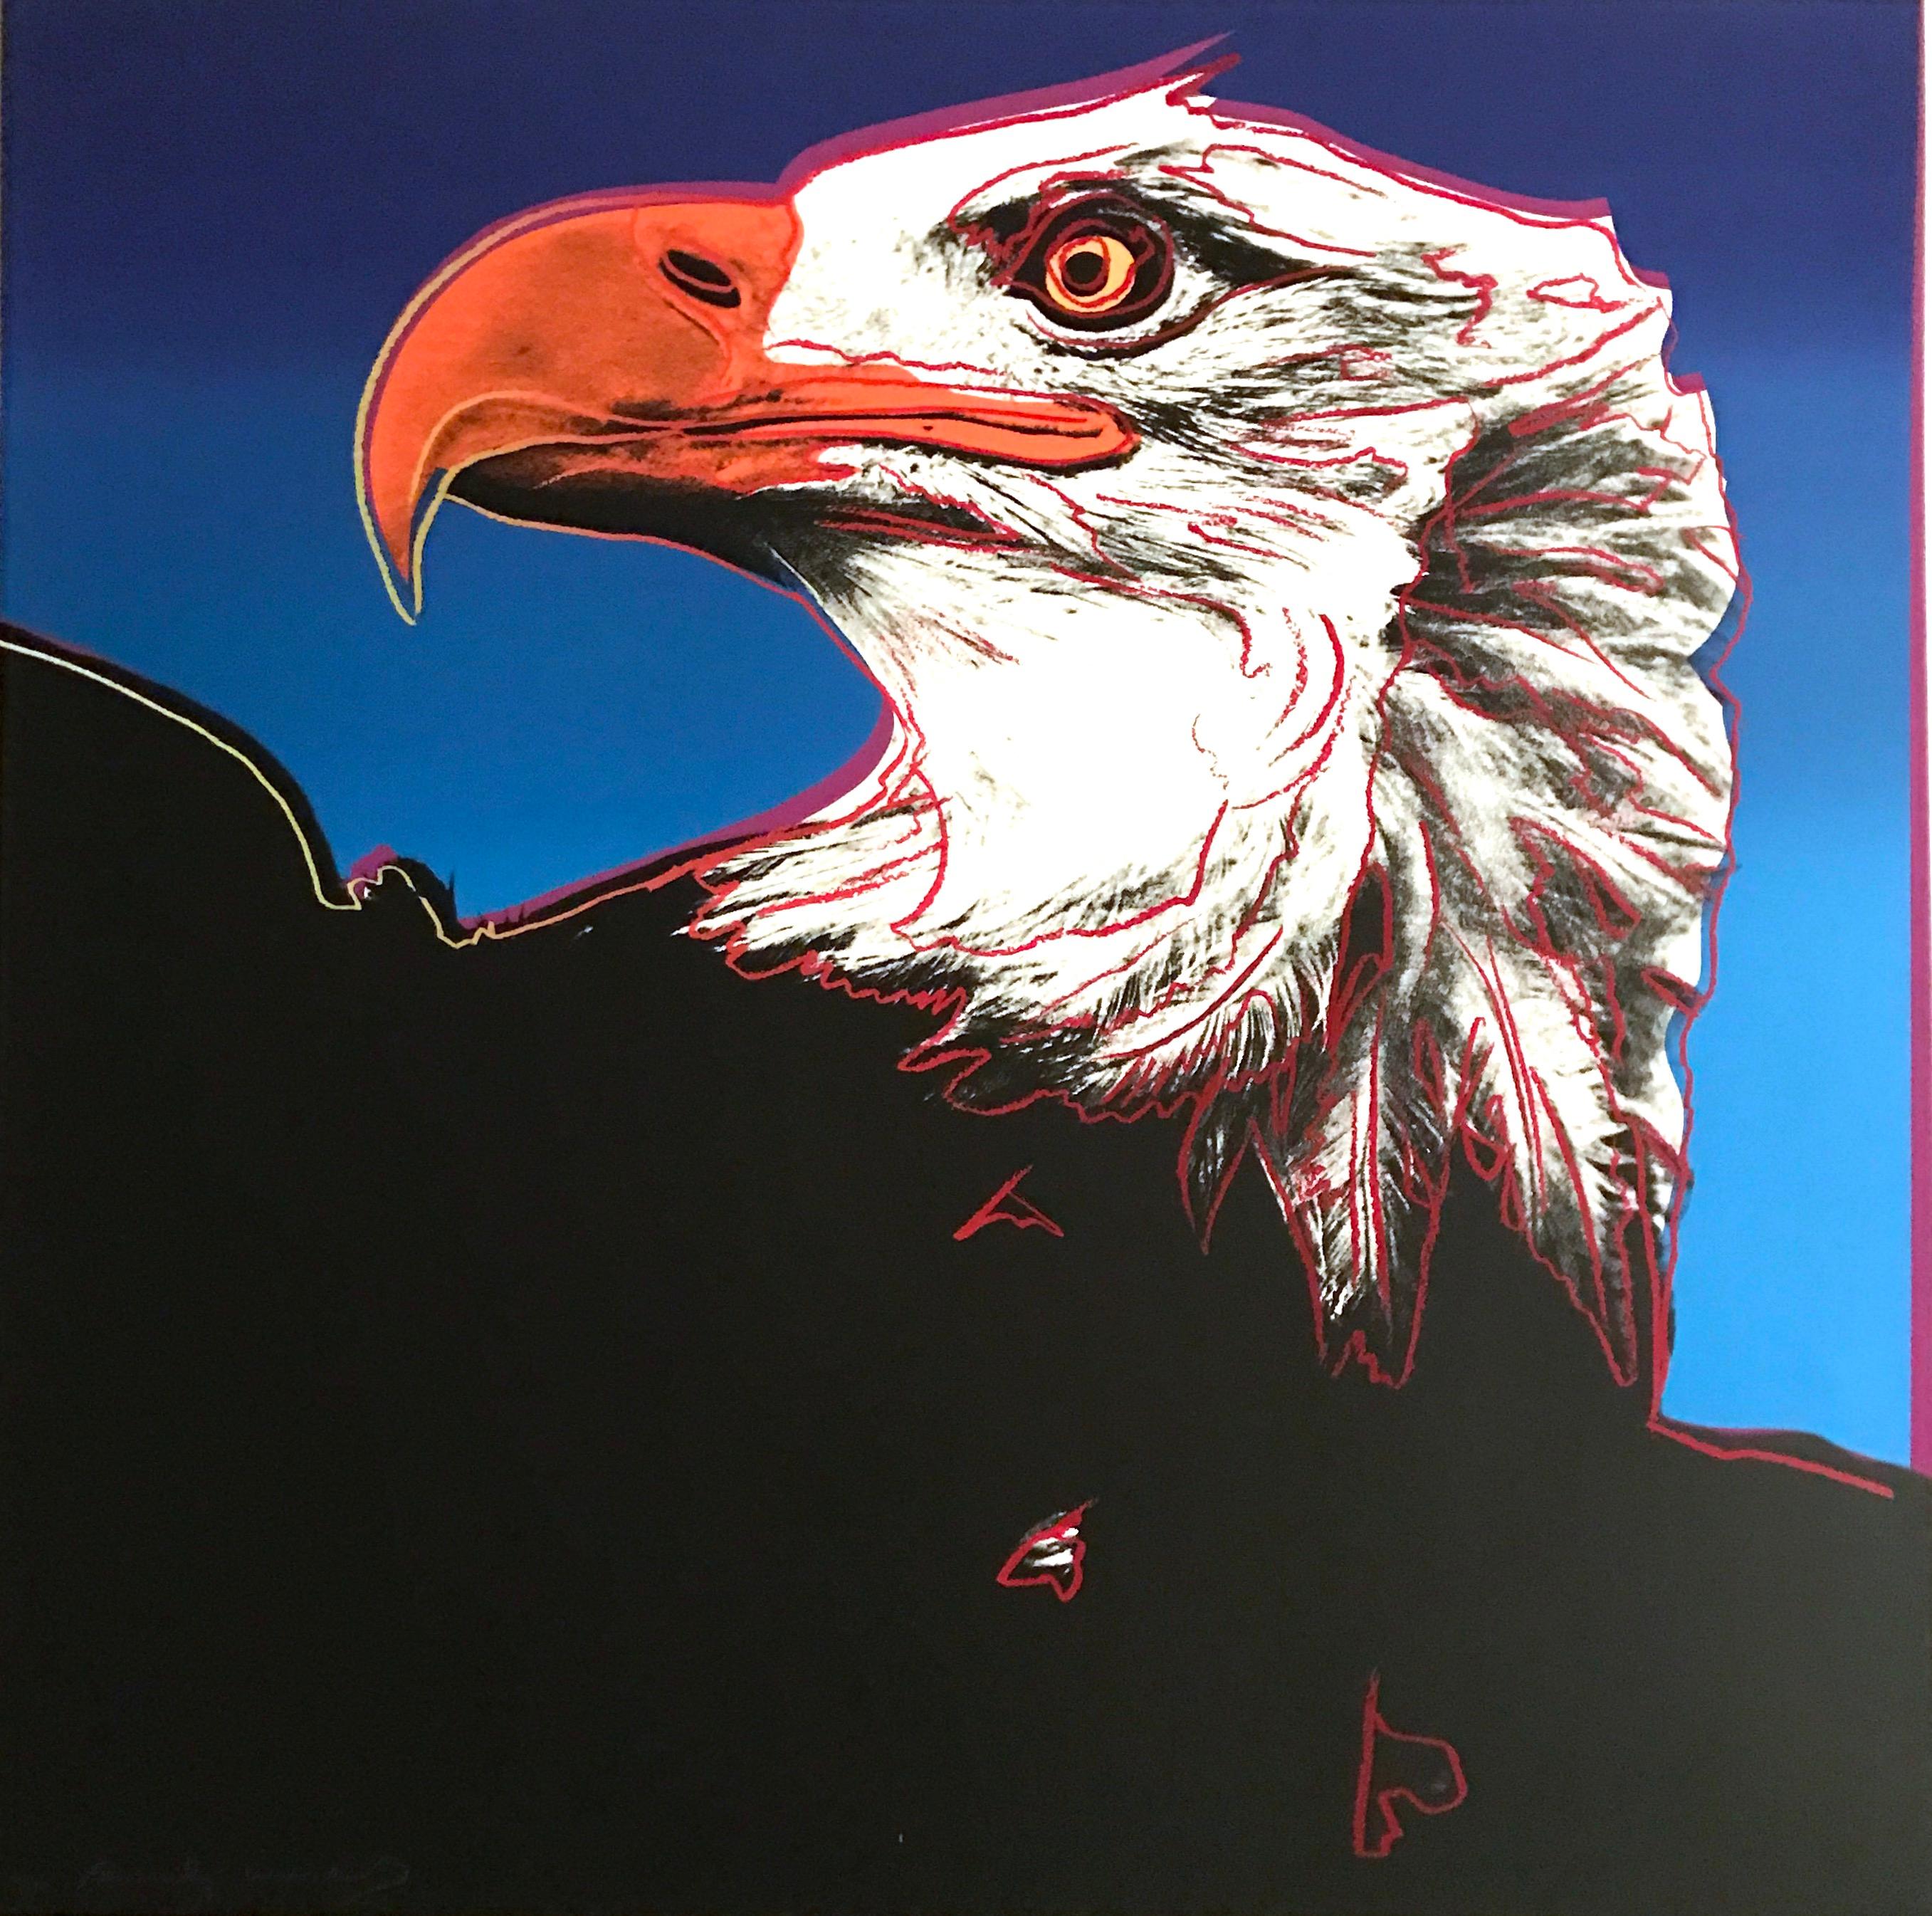 Andy Warhol Print - Bald Eagle, Endangered Species F&S II.296